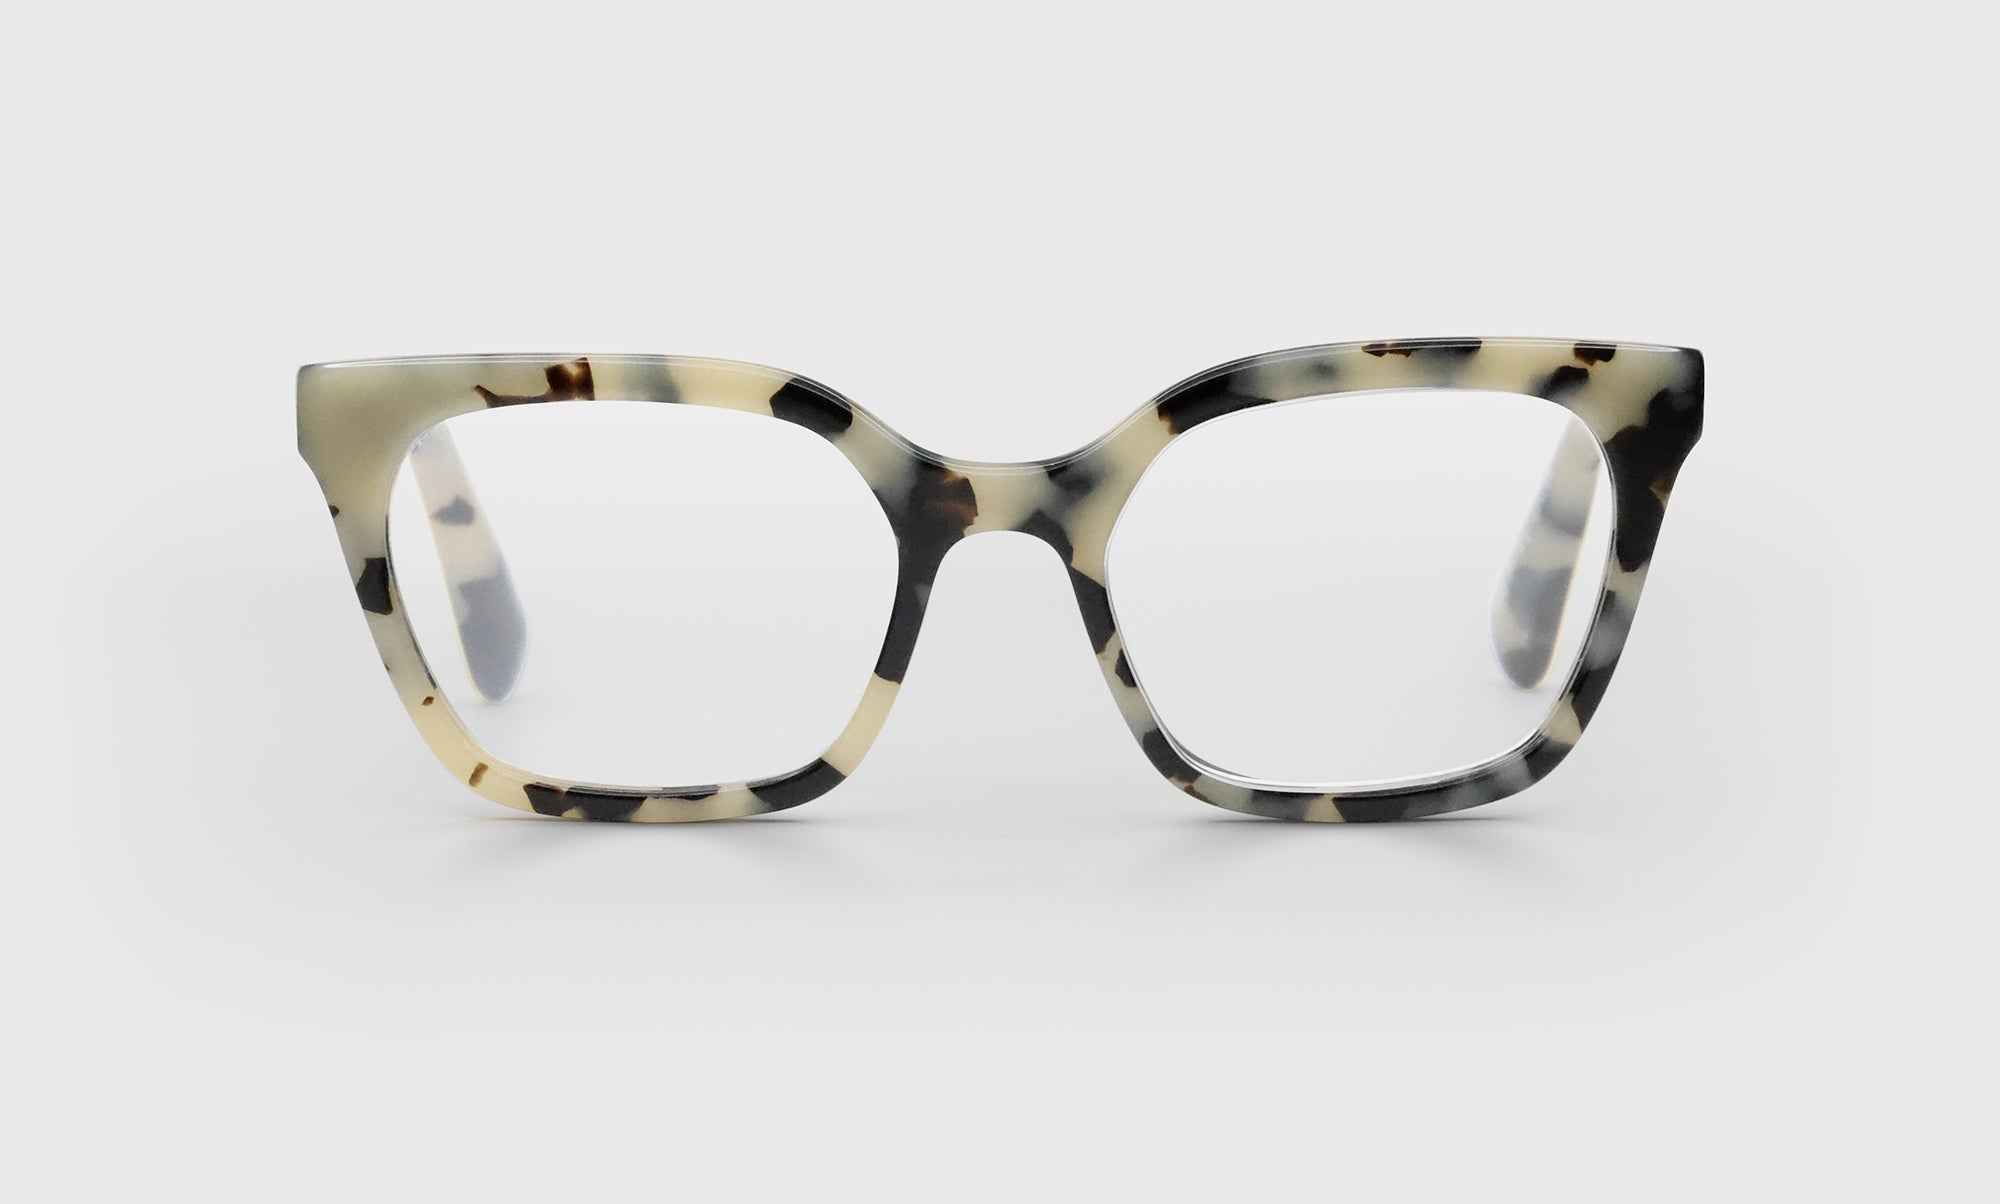 21_eyebobs premium designer overlook readers, blue light and prescription glasses in vanilla chop